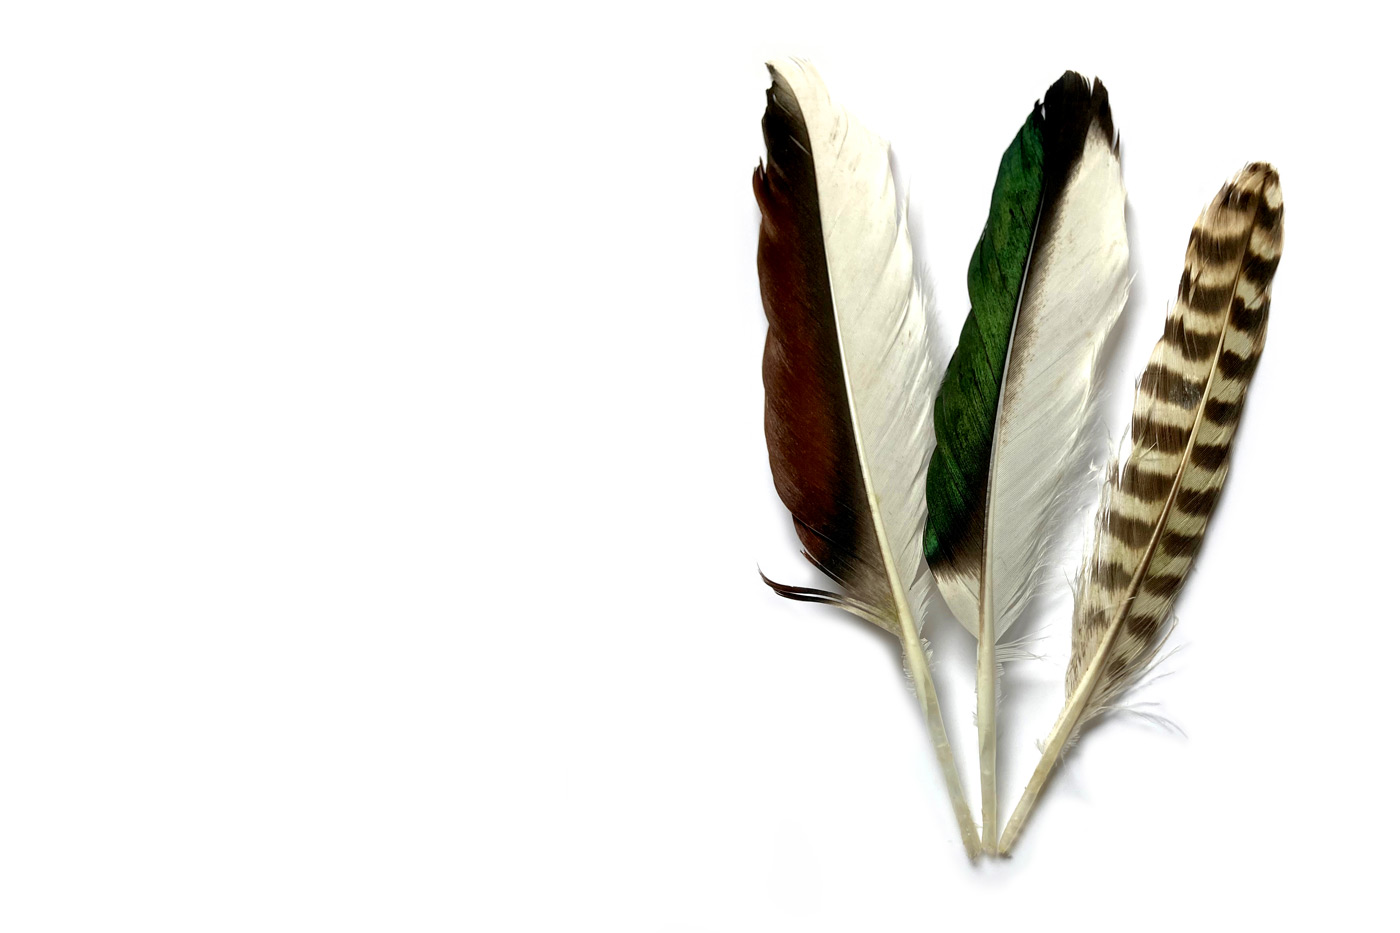 David Donohoe, Shelduck, Redshank feathers